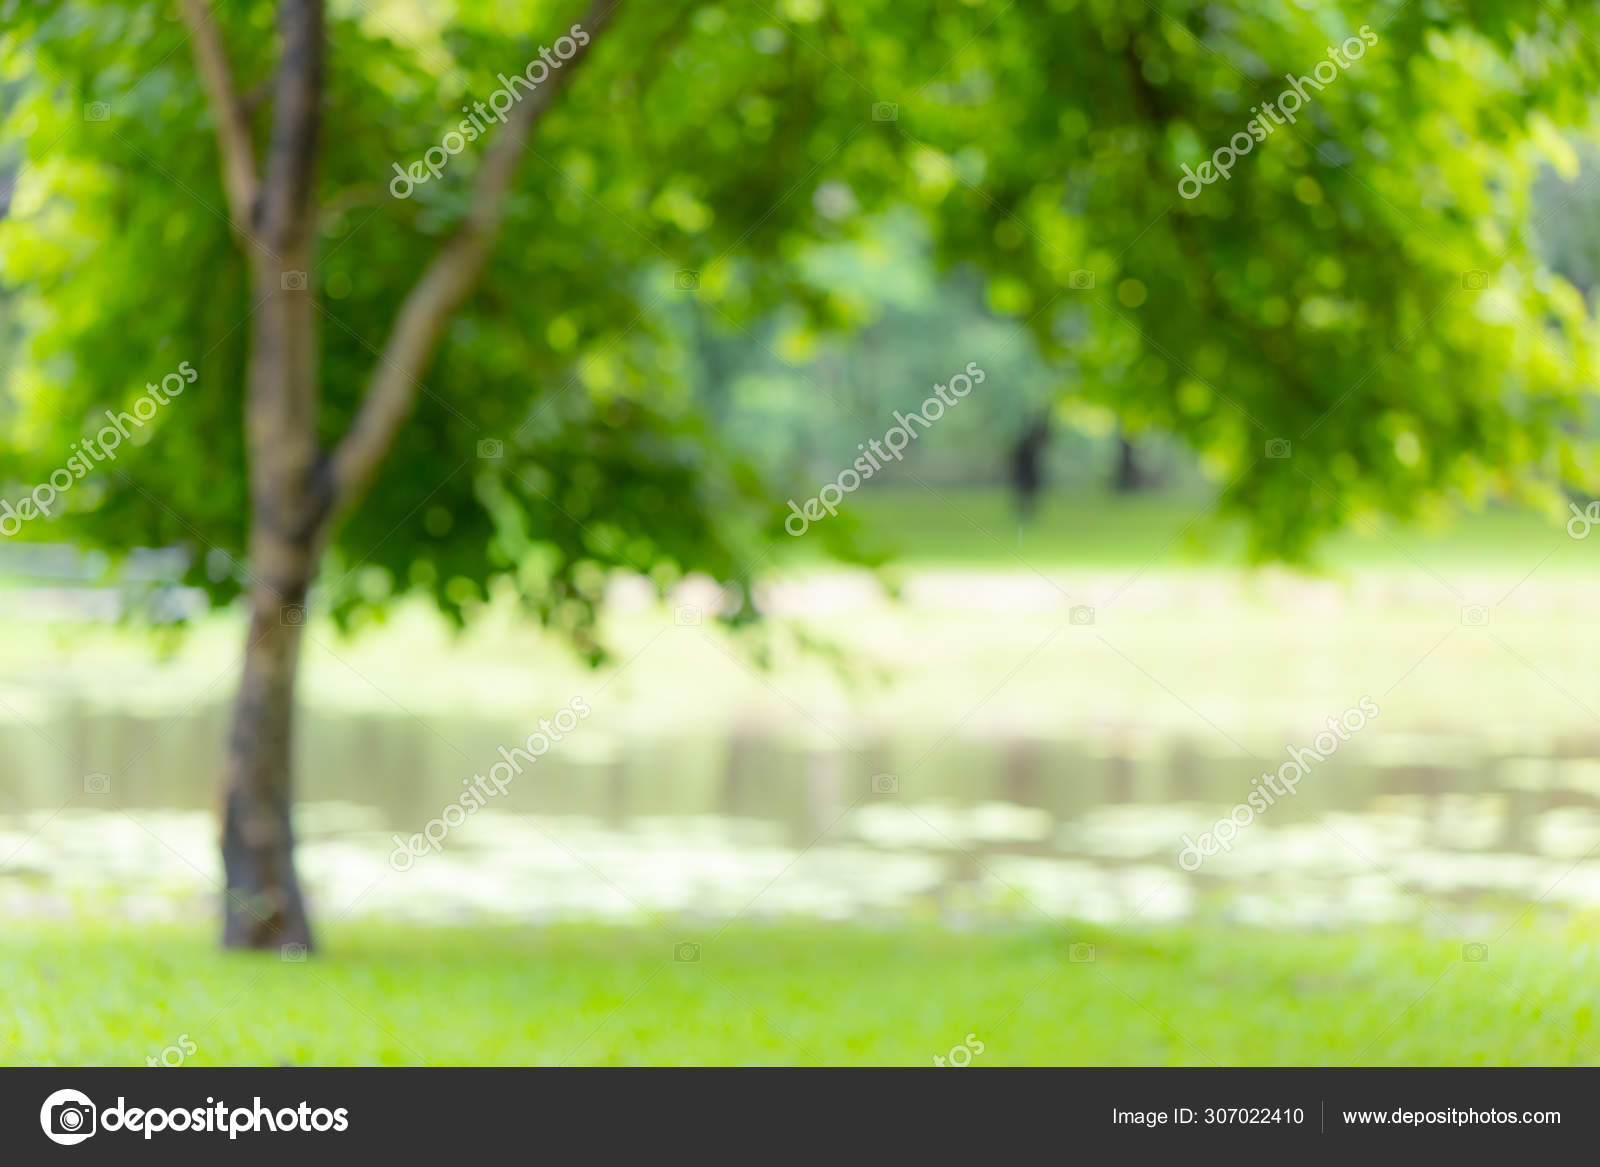 Blur Green Tree Park Outdoor Grass Field Lake Background Stock Photo by  ©coffeekai 307022410